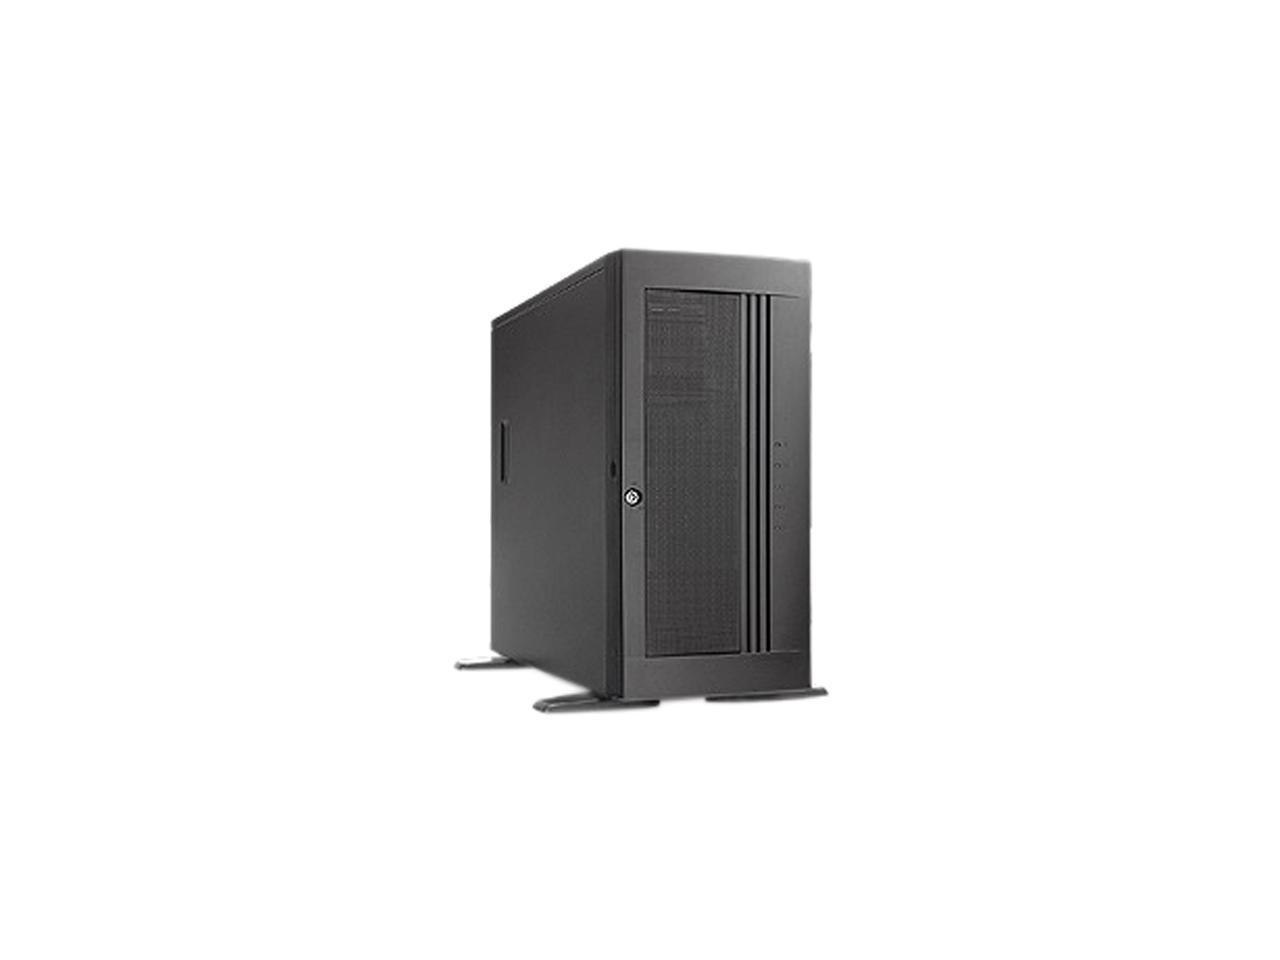 Chenbro SR105 Plus SR10569-C4+ Tower Server Case 3 External 5.25" Drive Bays